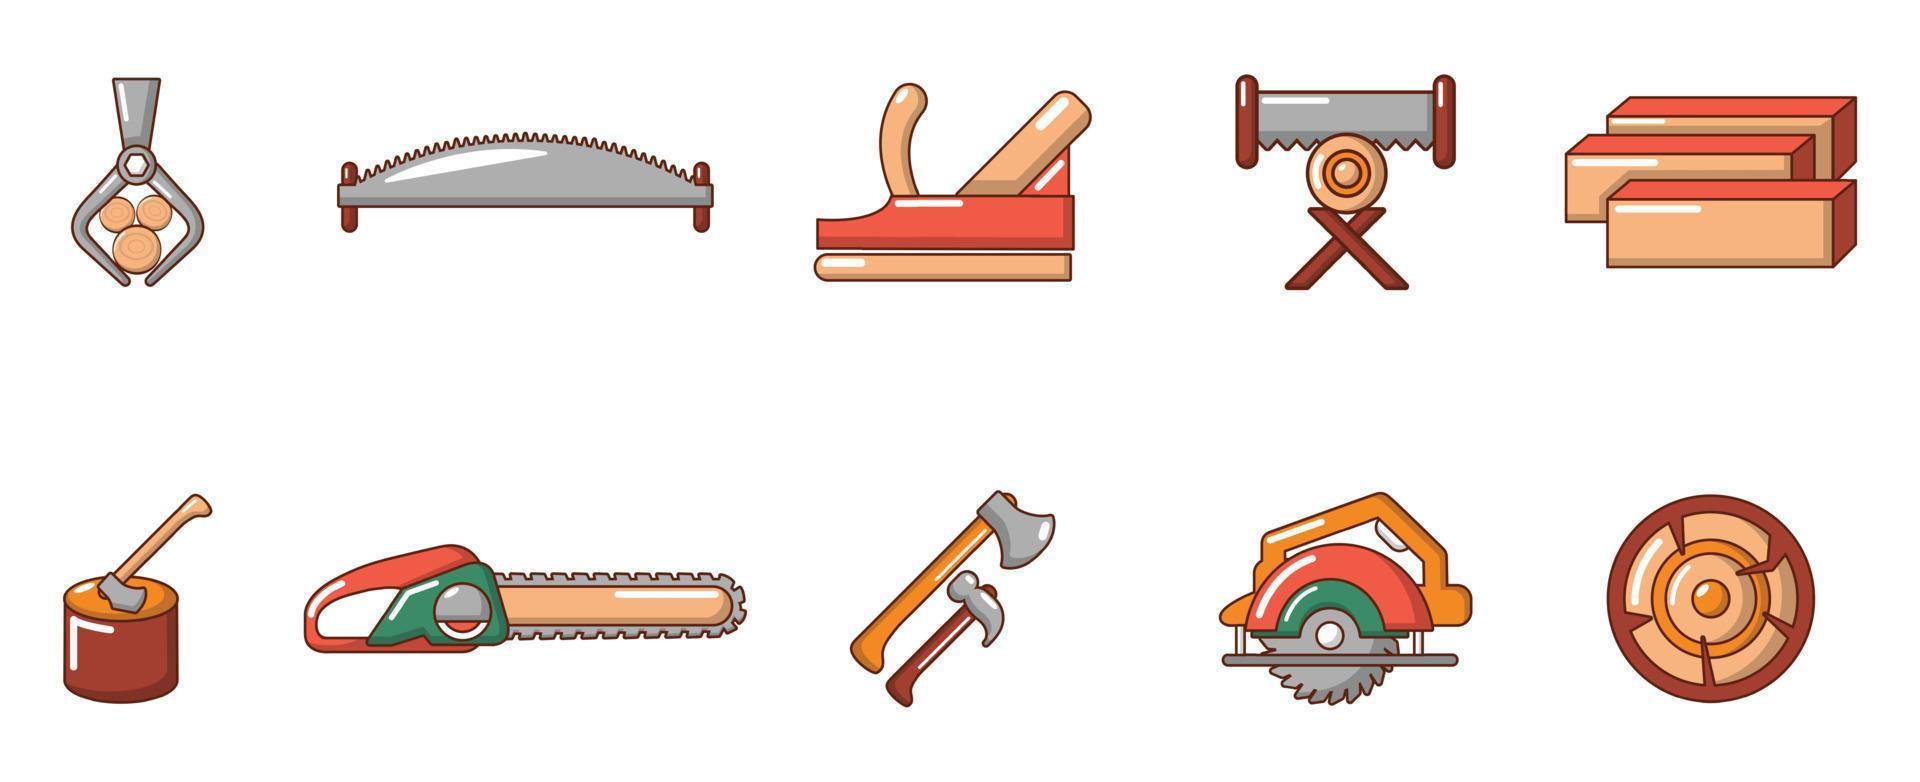 Cut wood tool icon set, cartoon style vector